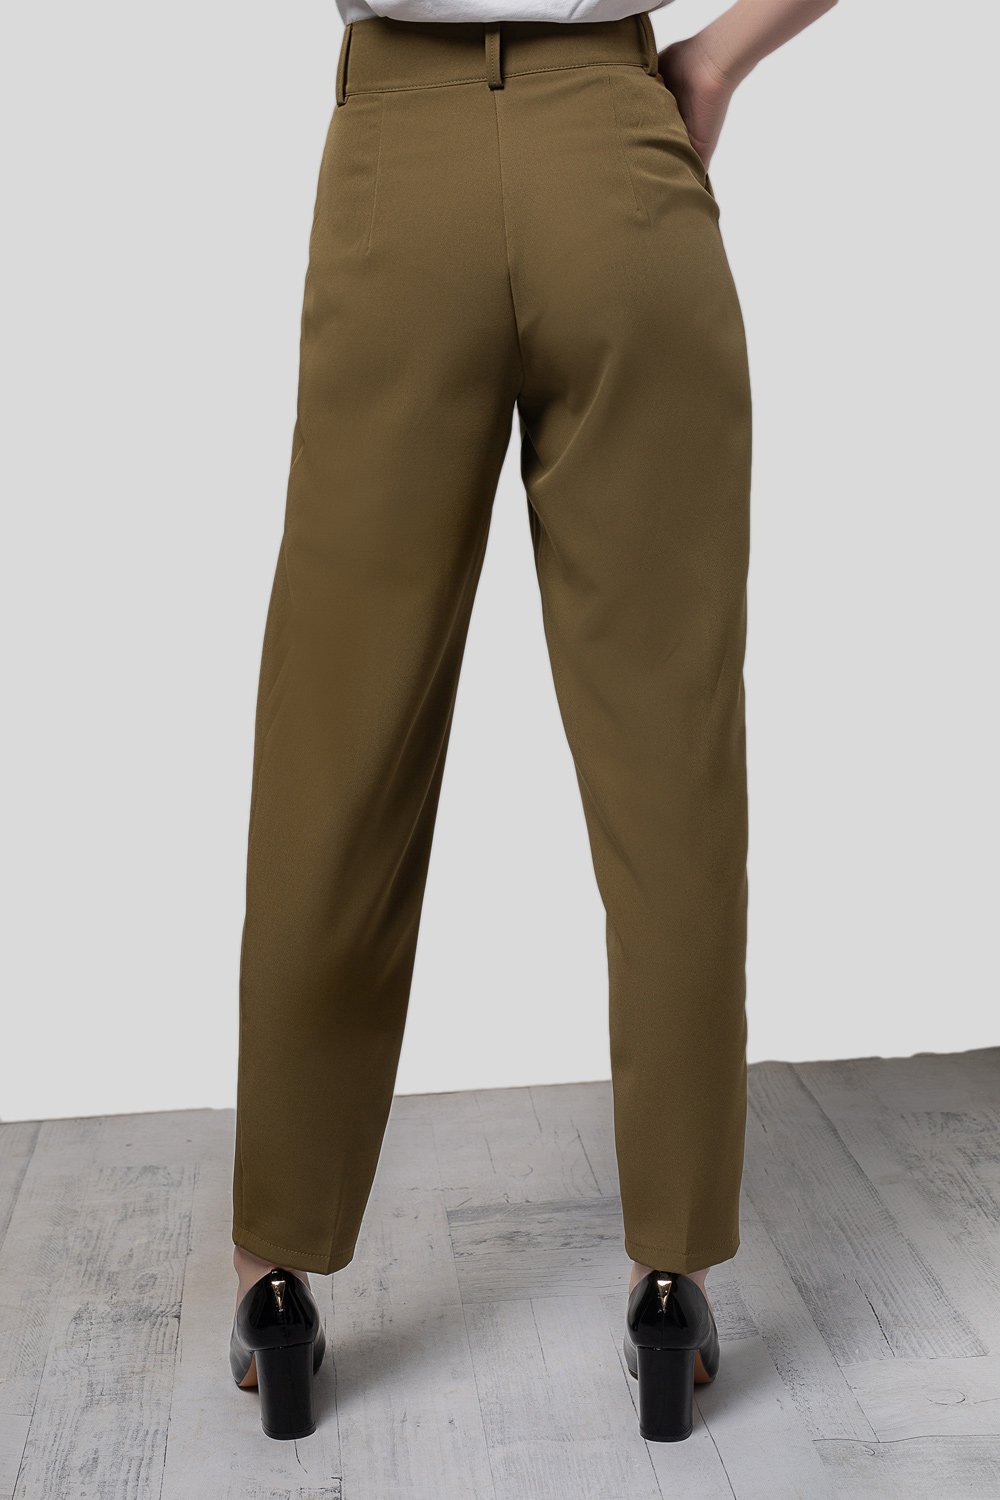 Khaki color darted trousers